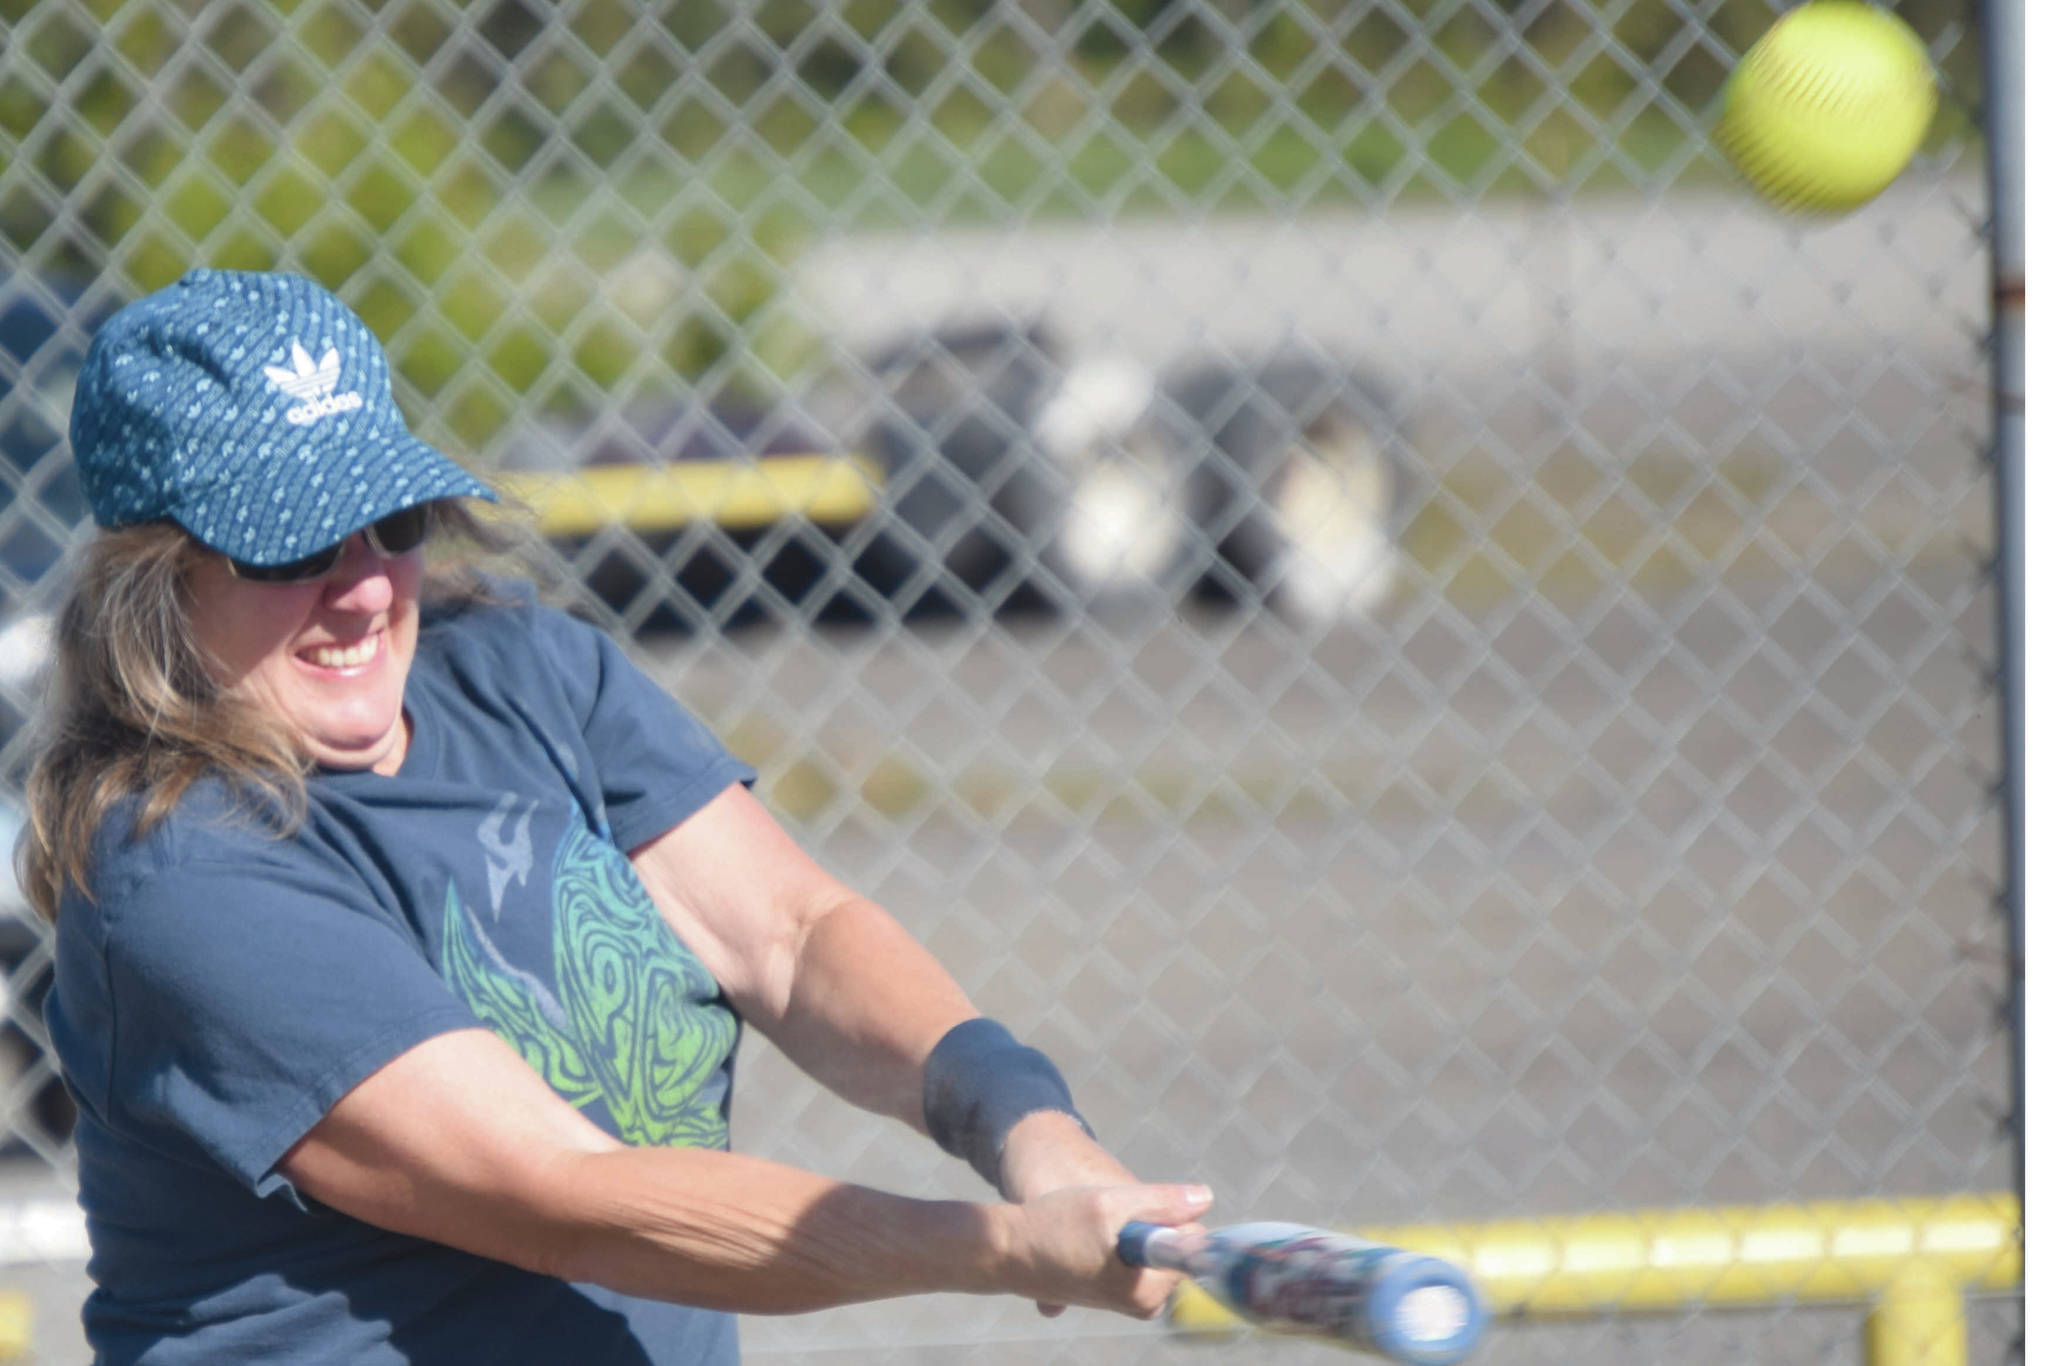 Judy Wroe of Soldotna bats during senior softball at the Steve Shearer Memorial Ball Park in Kenai, Alaska, on Tuesday, June 16, 2020. (Photo by Jeff Helminiak/Peninsula Clarion)